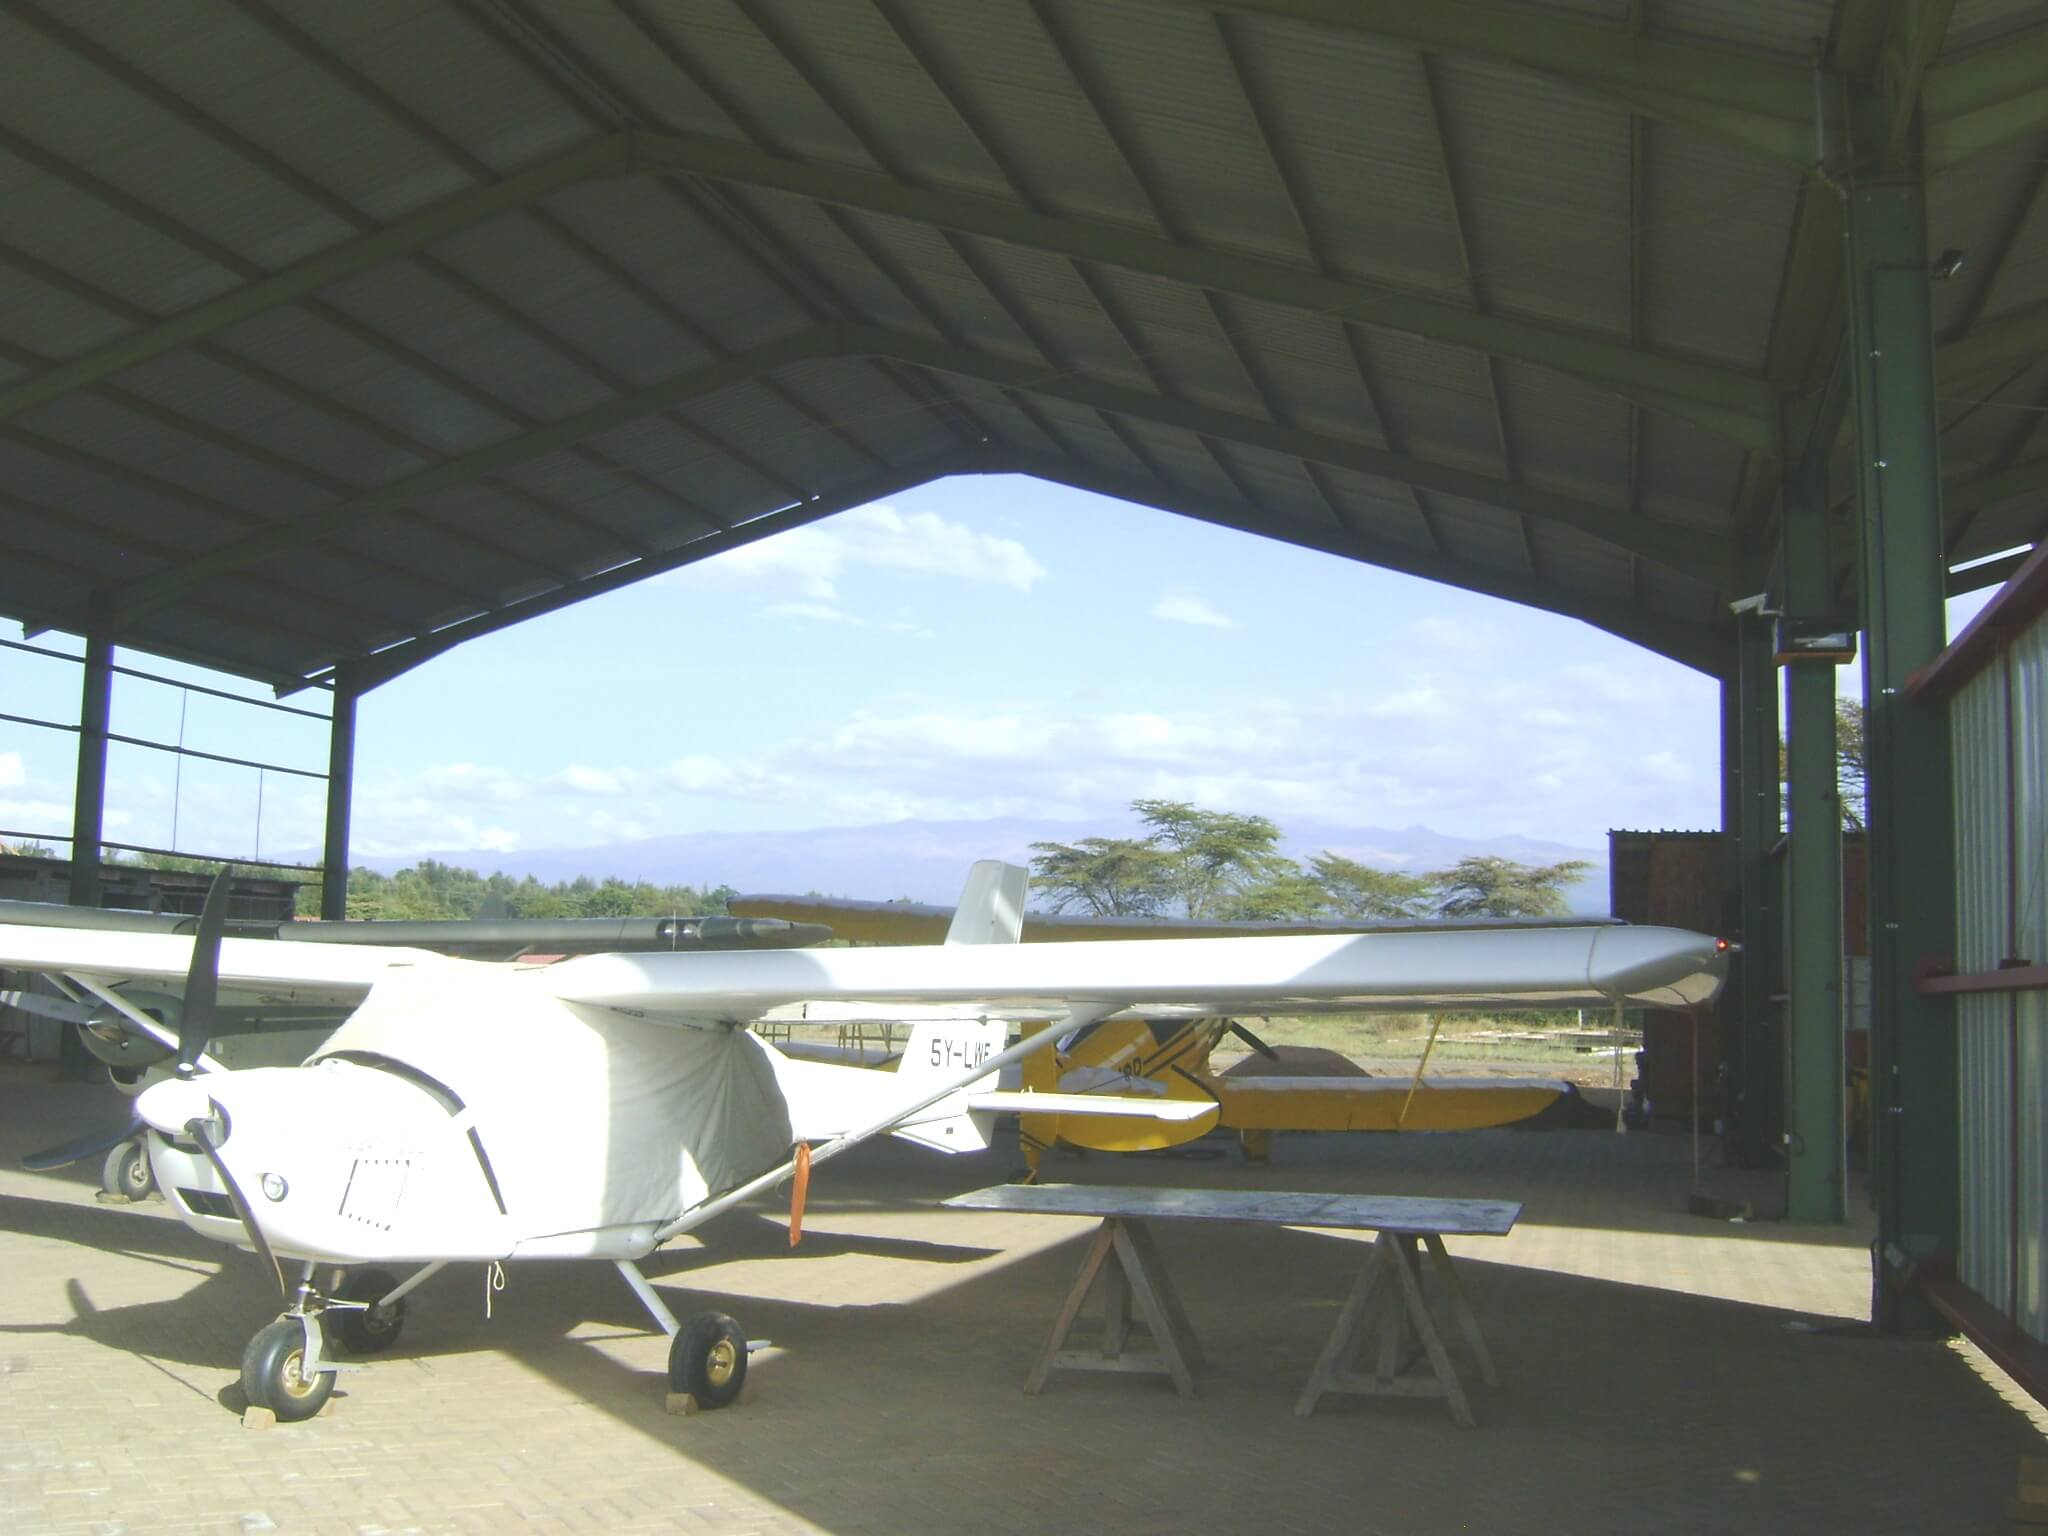 SSS4228 - 2013 - AIRCRAFT SHELTER, NANYUKI, KENYA